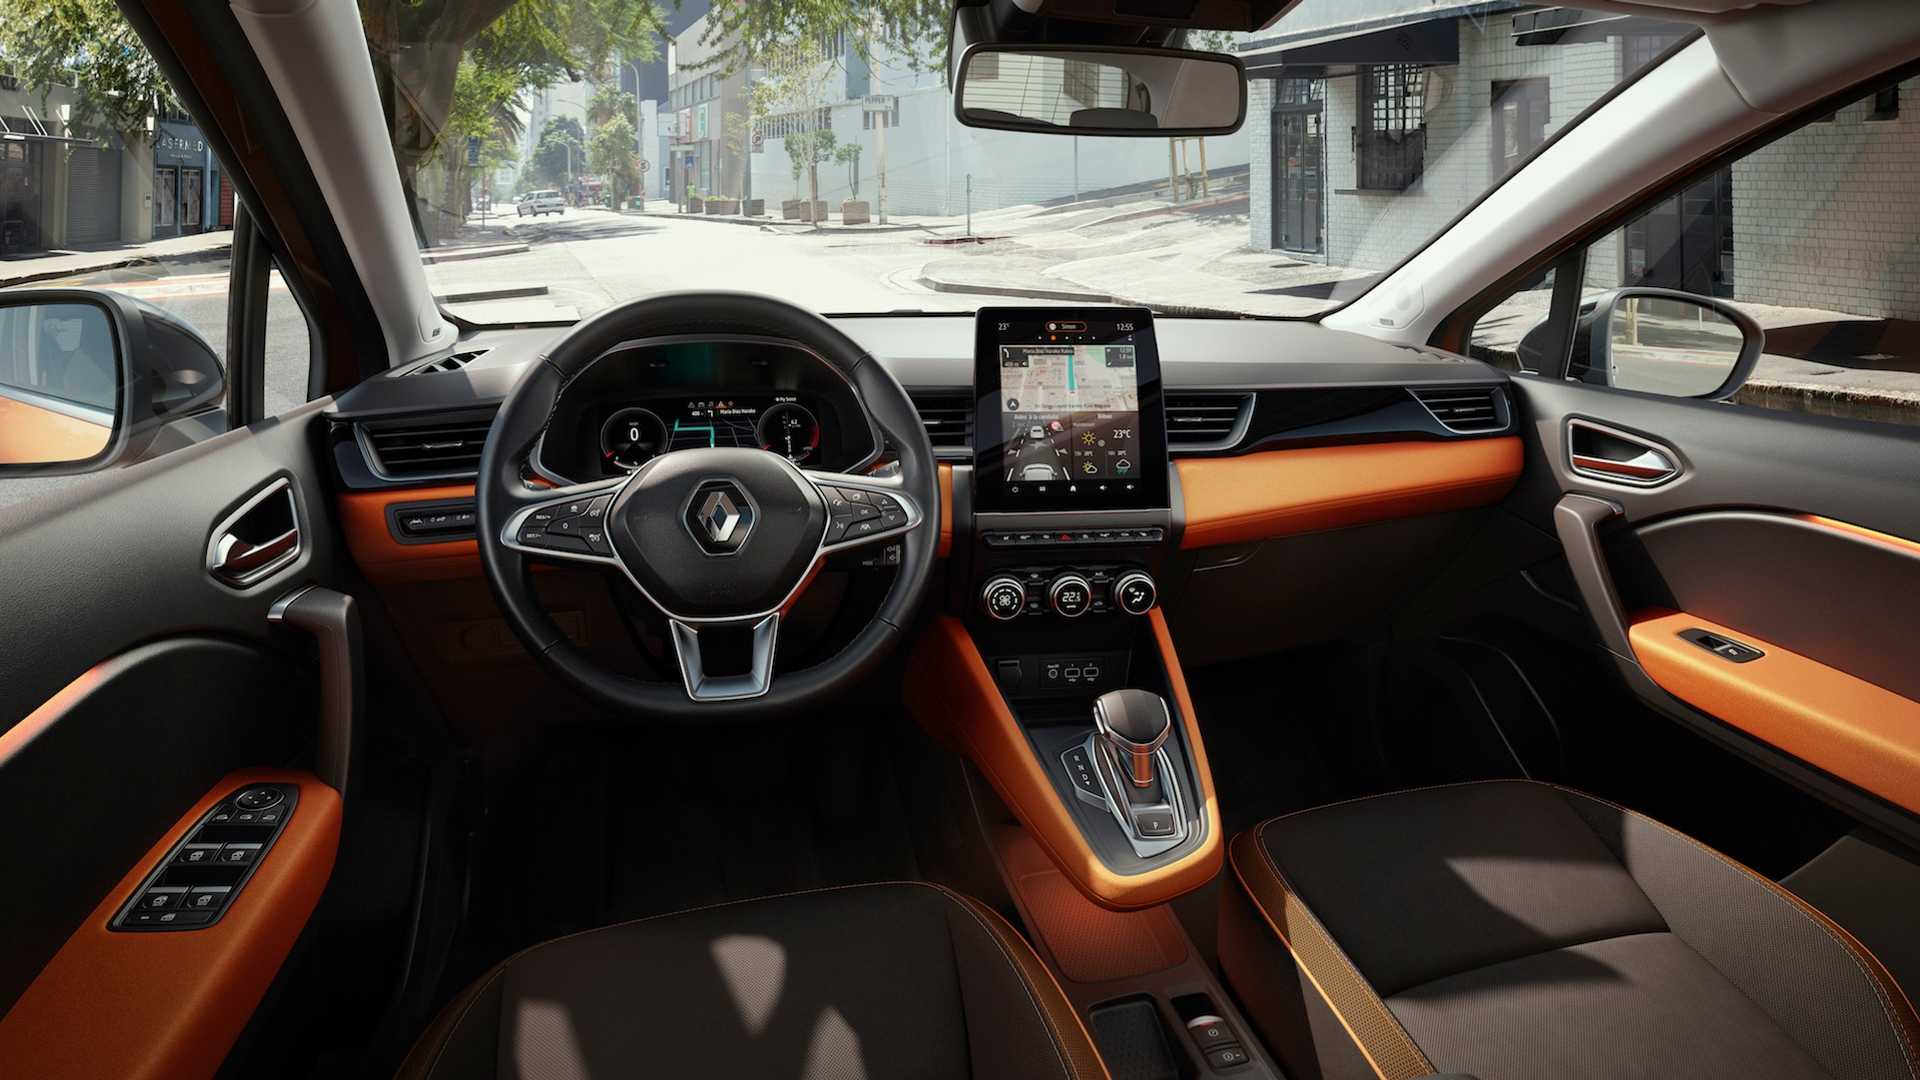 Renault Captur interior - Cockpit